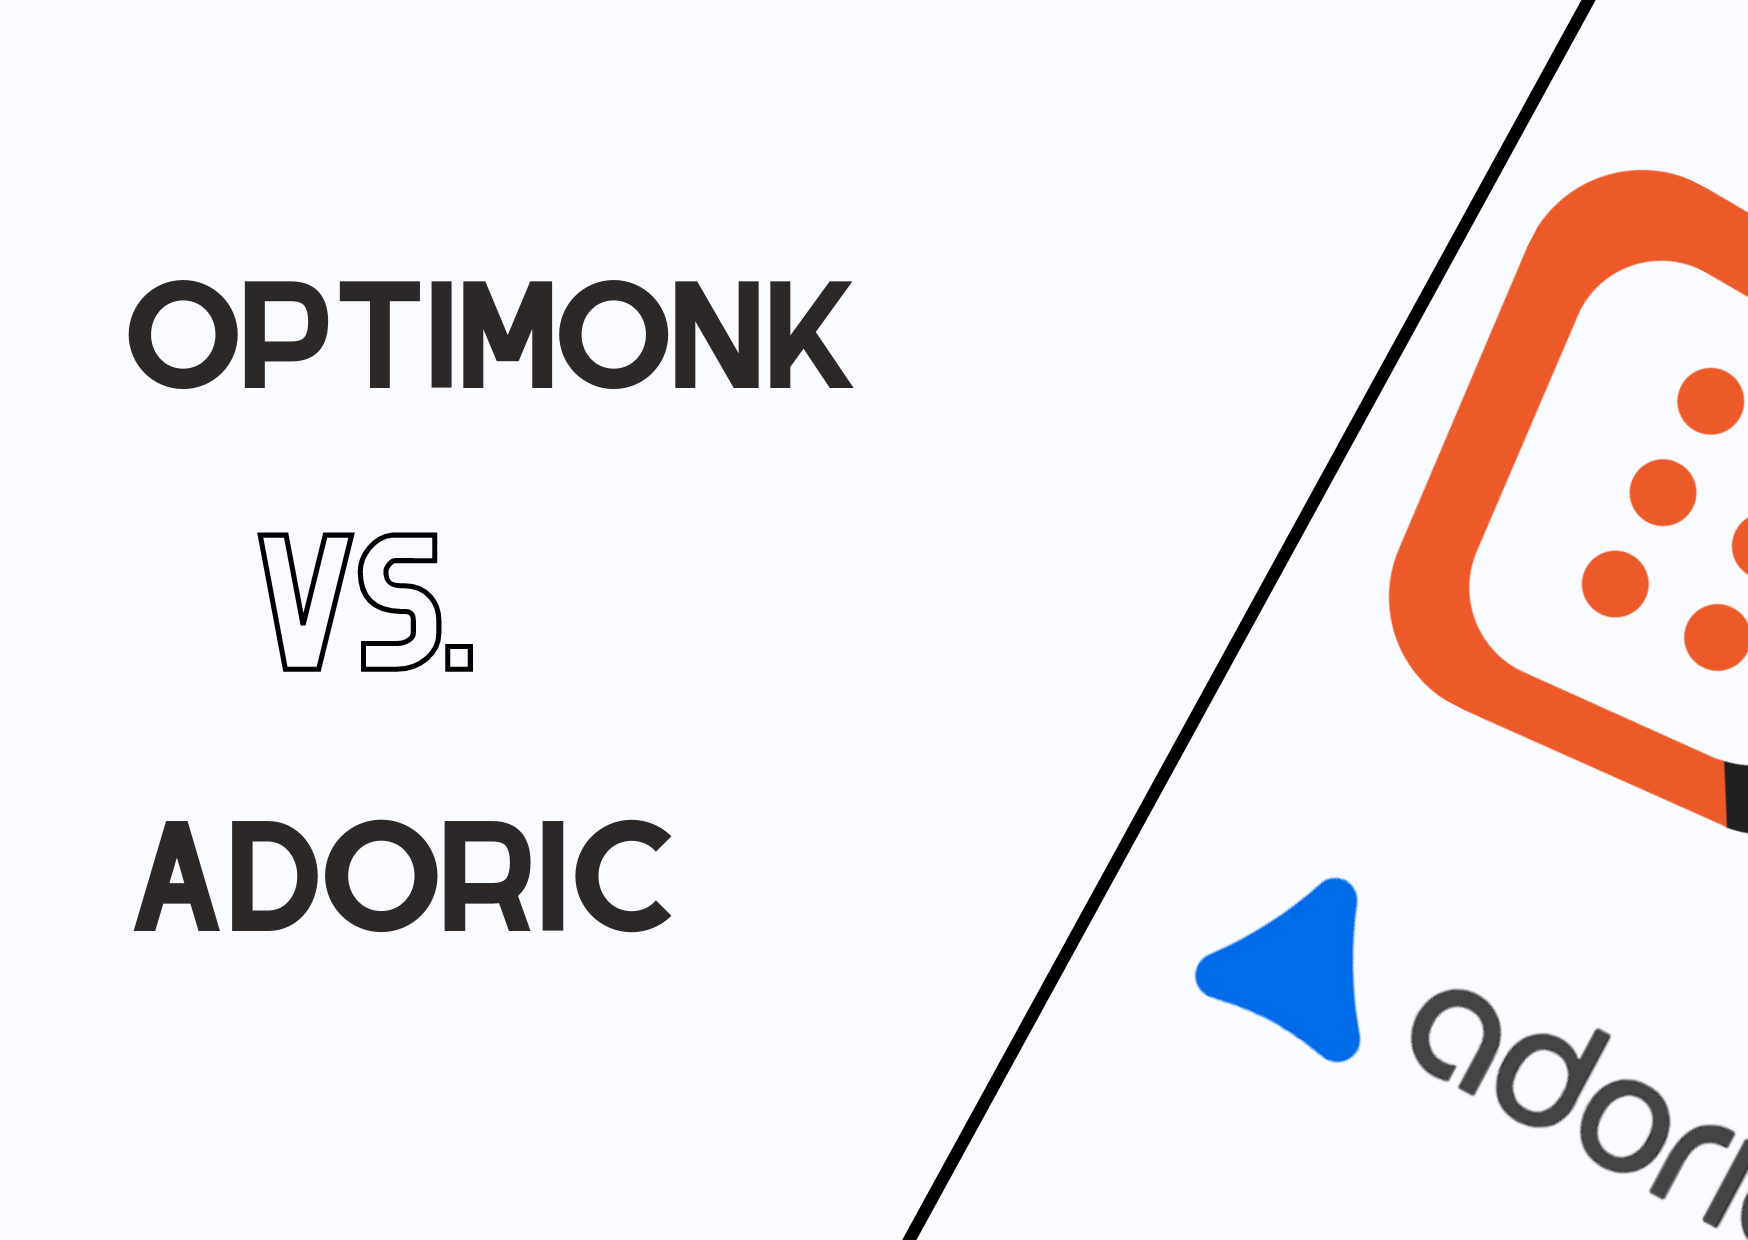 OptiMonk vs Adoric comparison banner with the logos